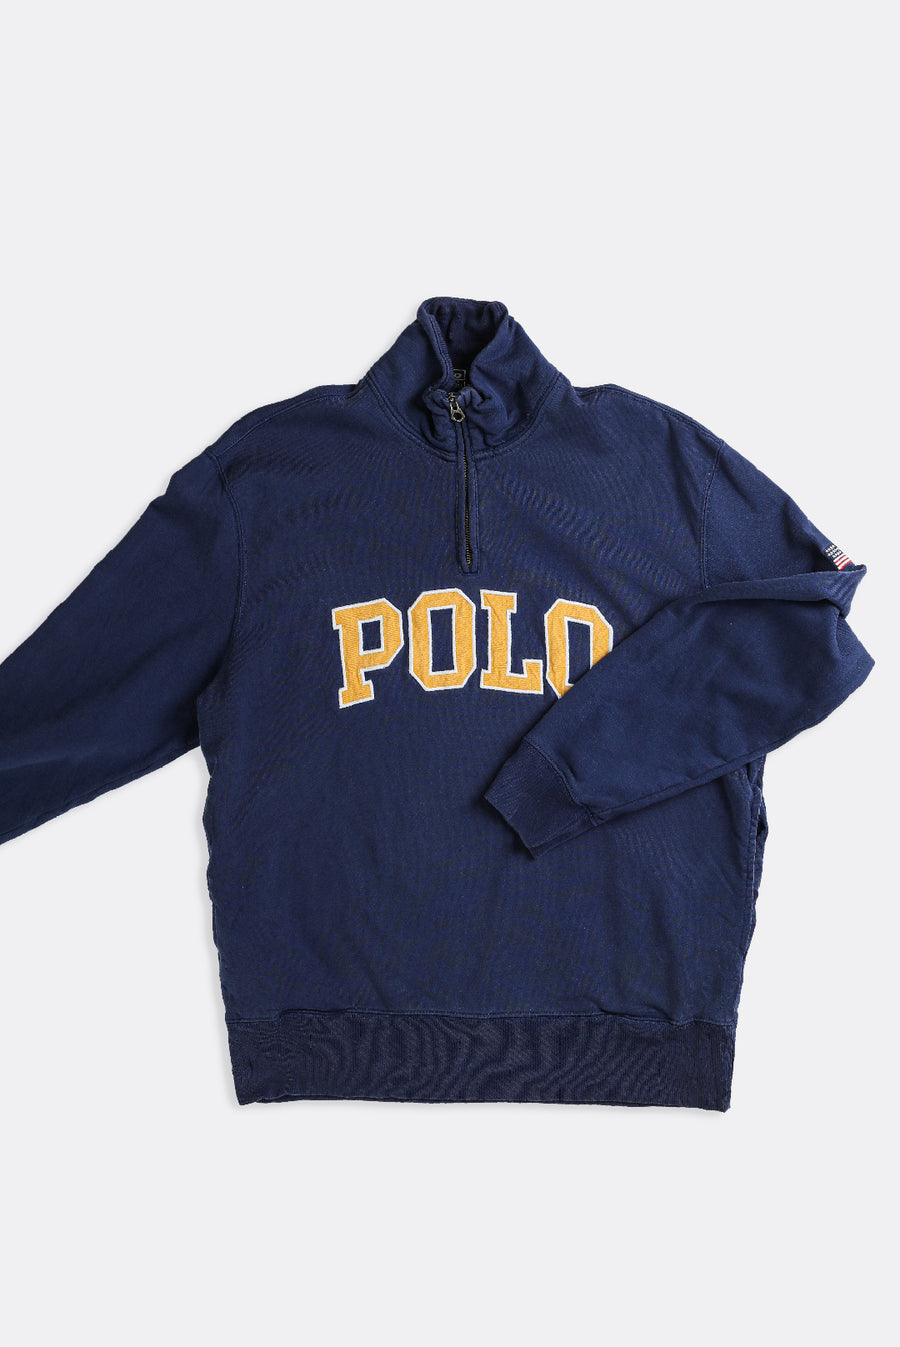 Vintage Polo Sweatshirt